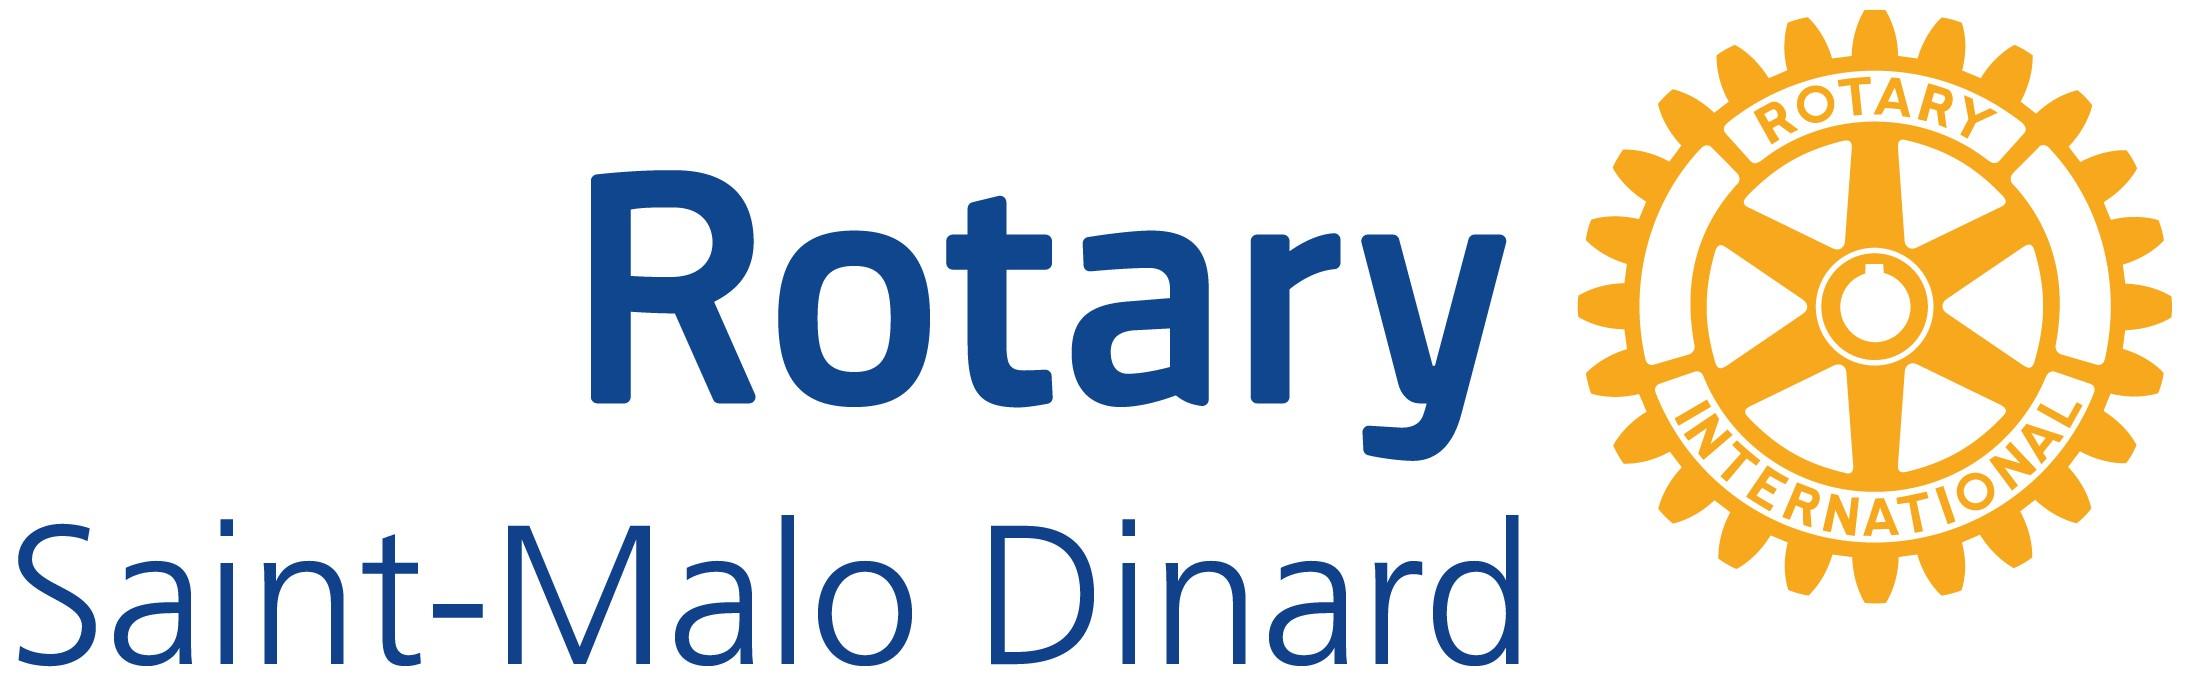 Rotary Saint-Malo et Dinard